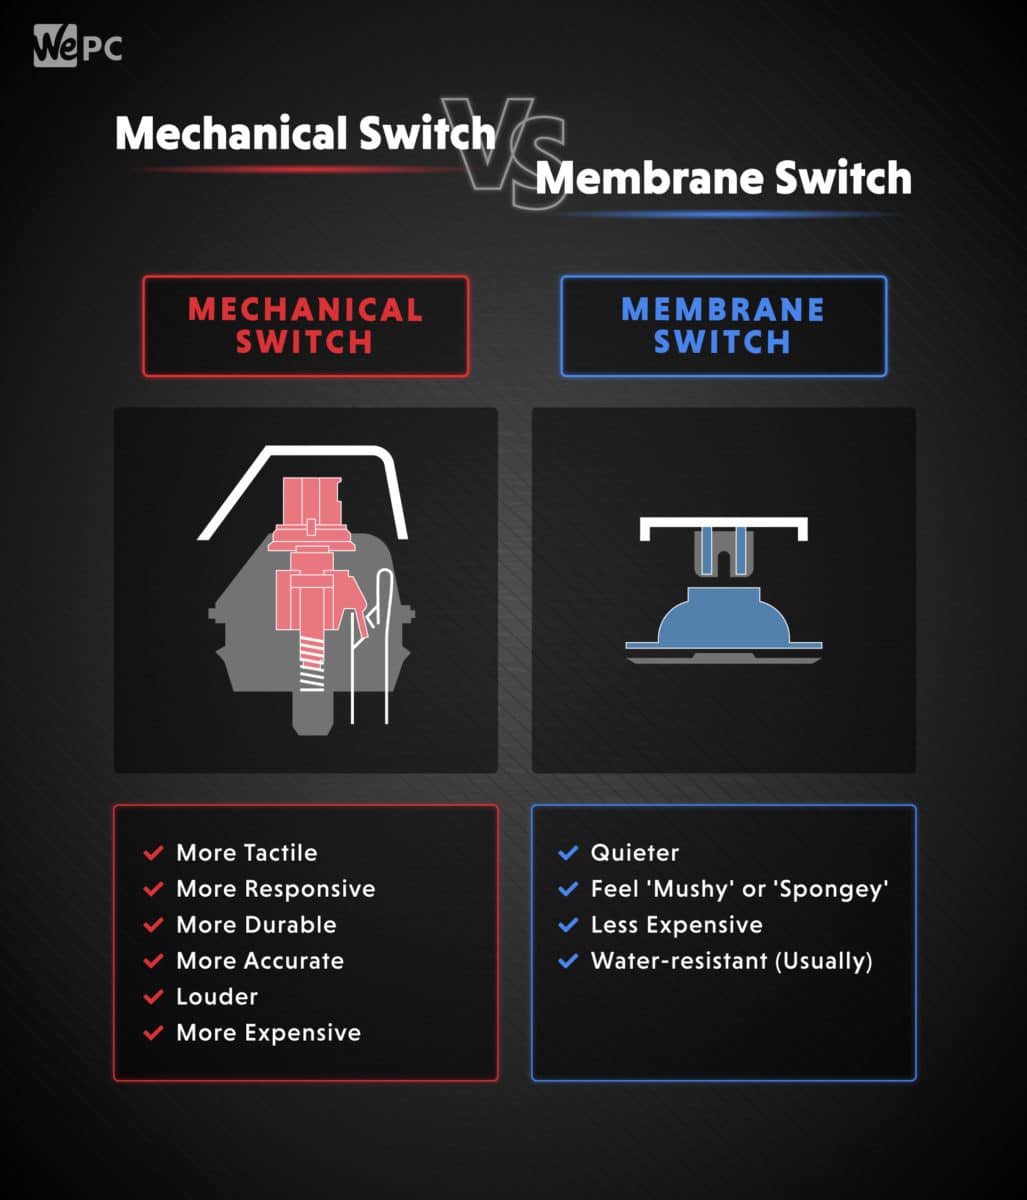 Mechanical Switch vs Membrane Switch